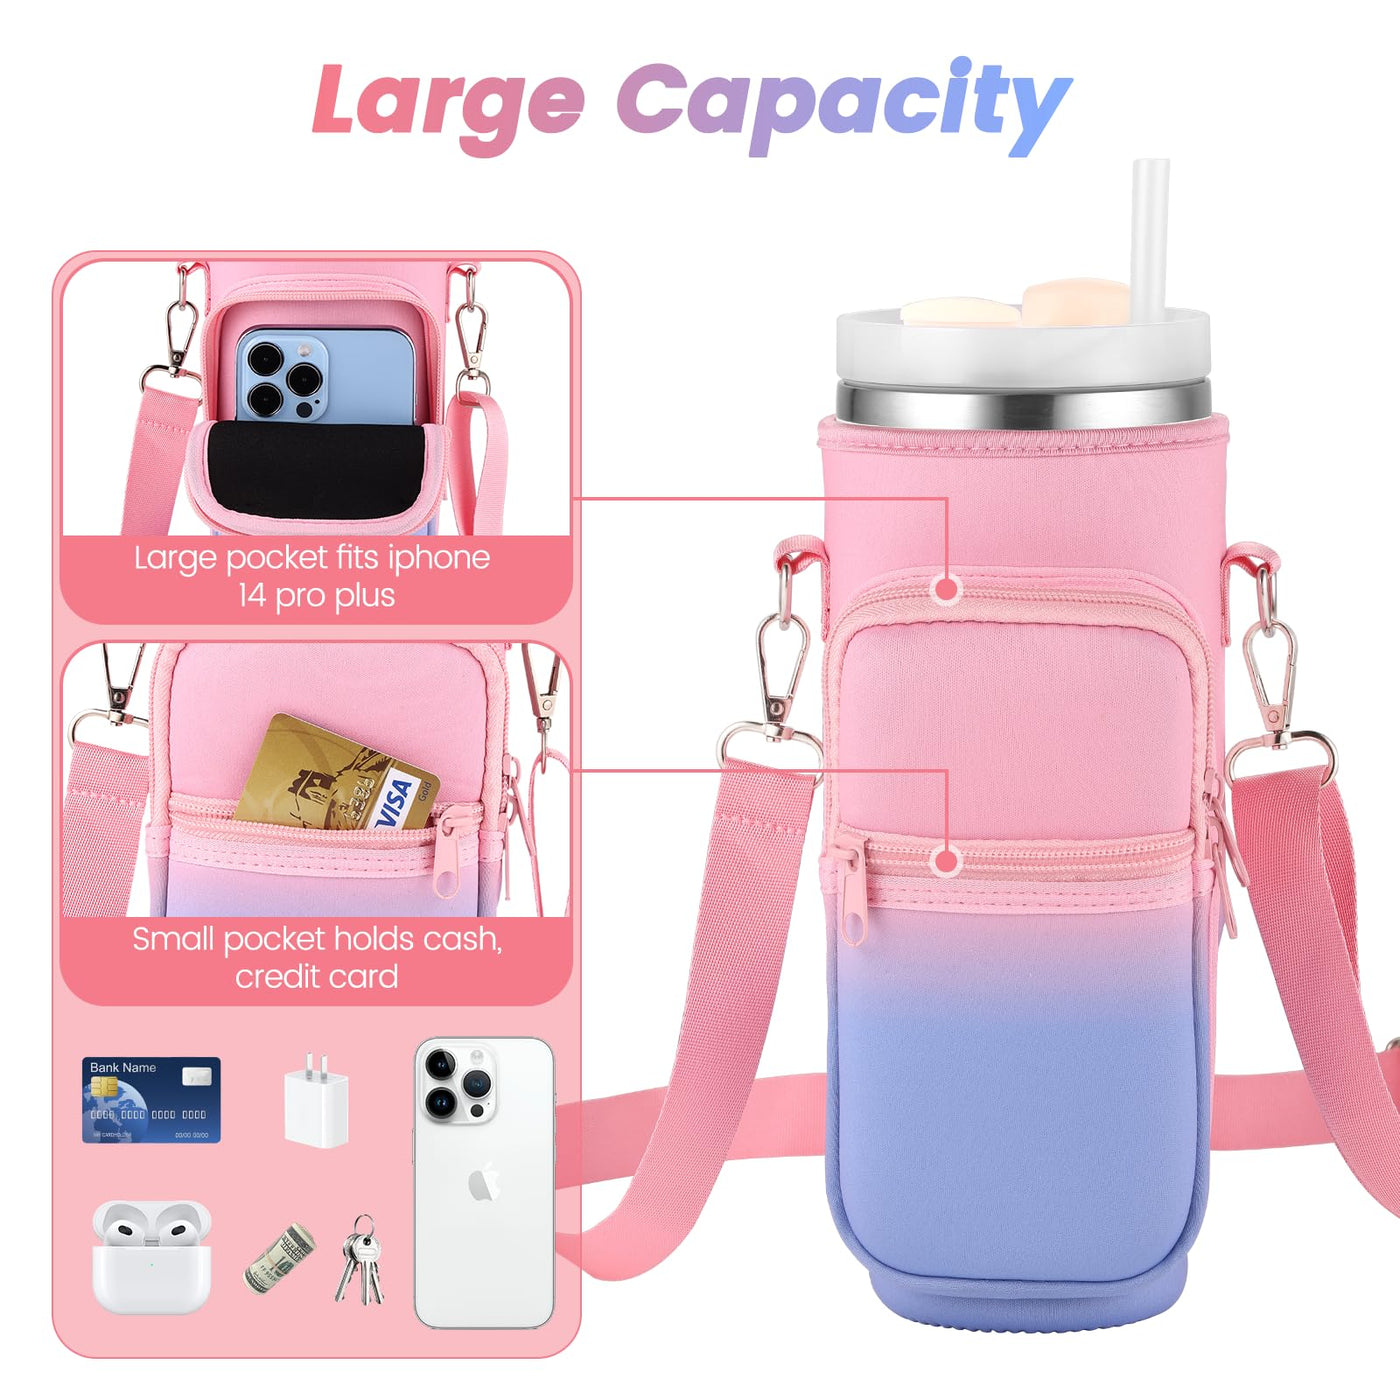 Water Bottle Carrier Bag Compatible with Stanley 40oz Tumbler with Handle,  Water Bottle Holder with Adjustable Shoulder Strap